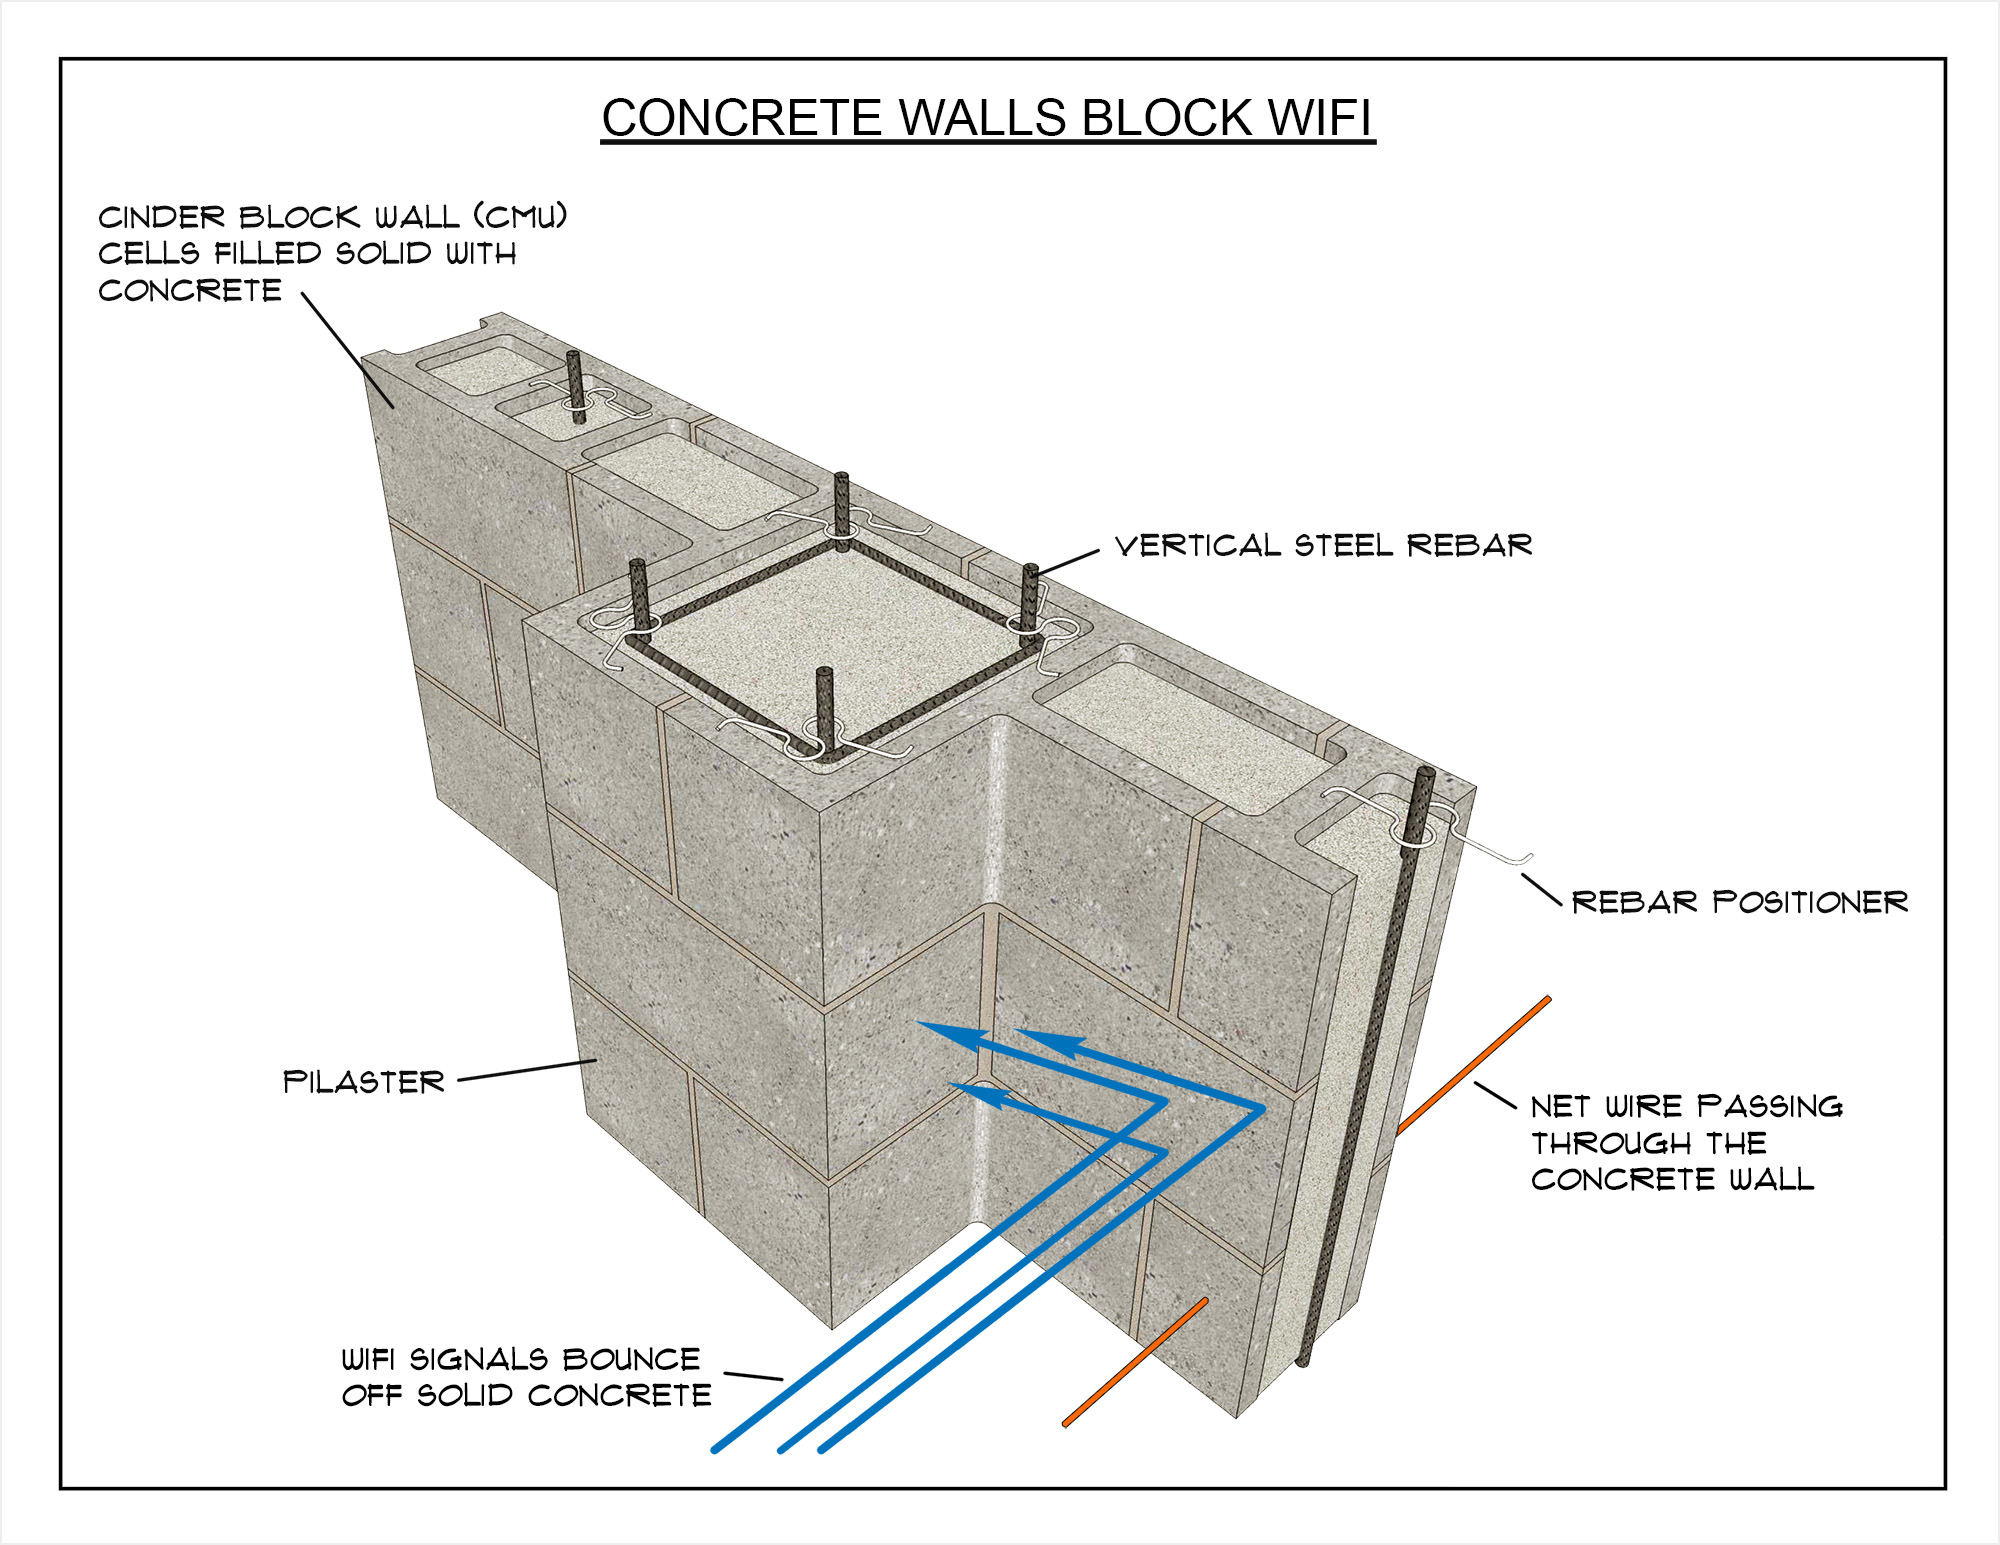 WiFi won't pass through a concrete wall infographic 1